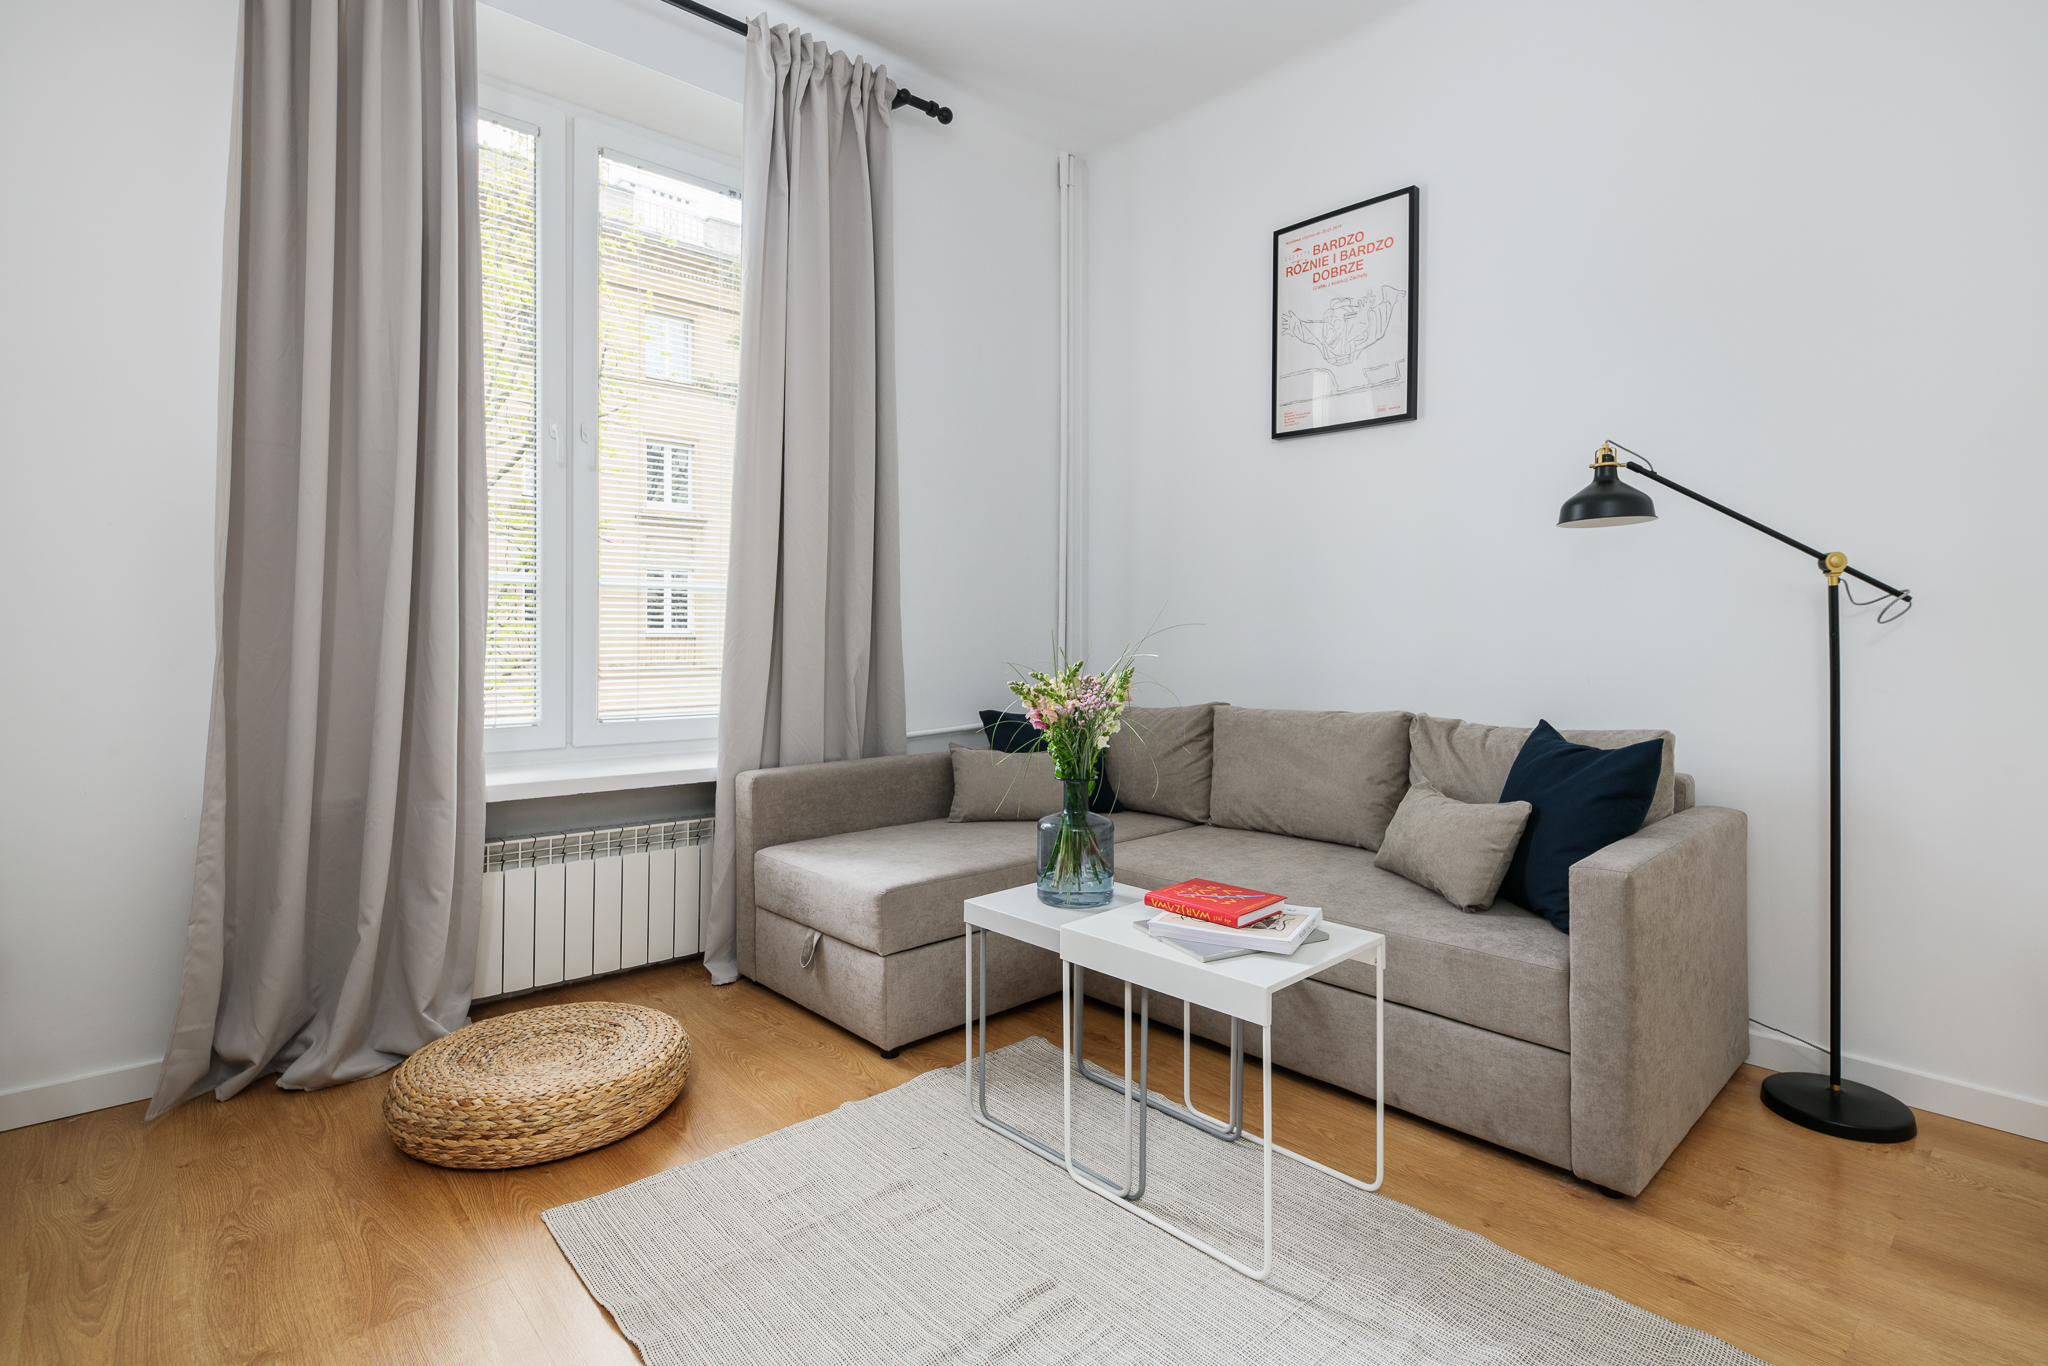 WARSAW NOWY ŚWIAT Comfortable & Quiet Apartment / Chmielna Apartments for rent